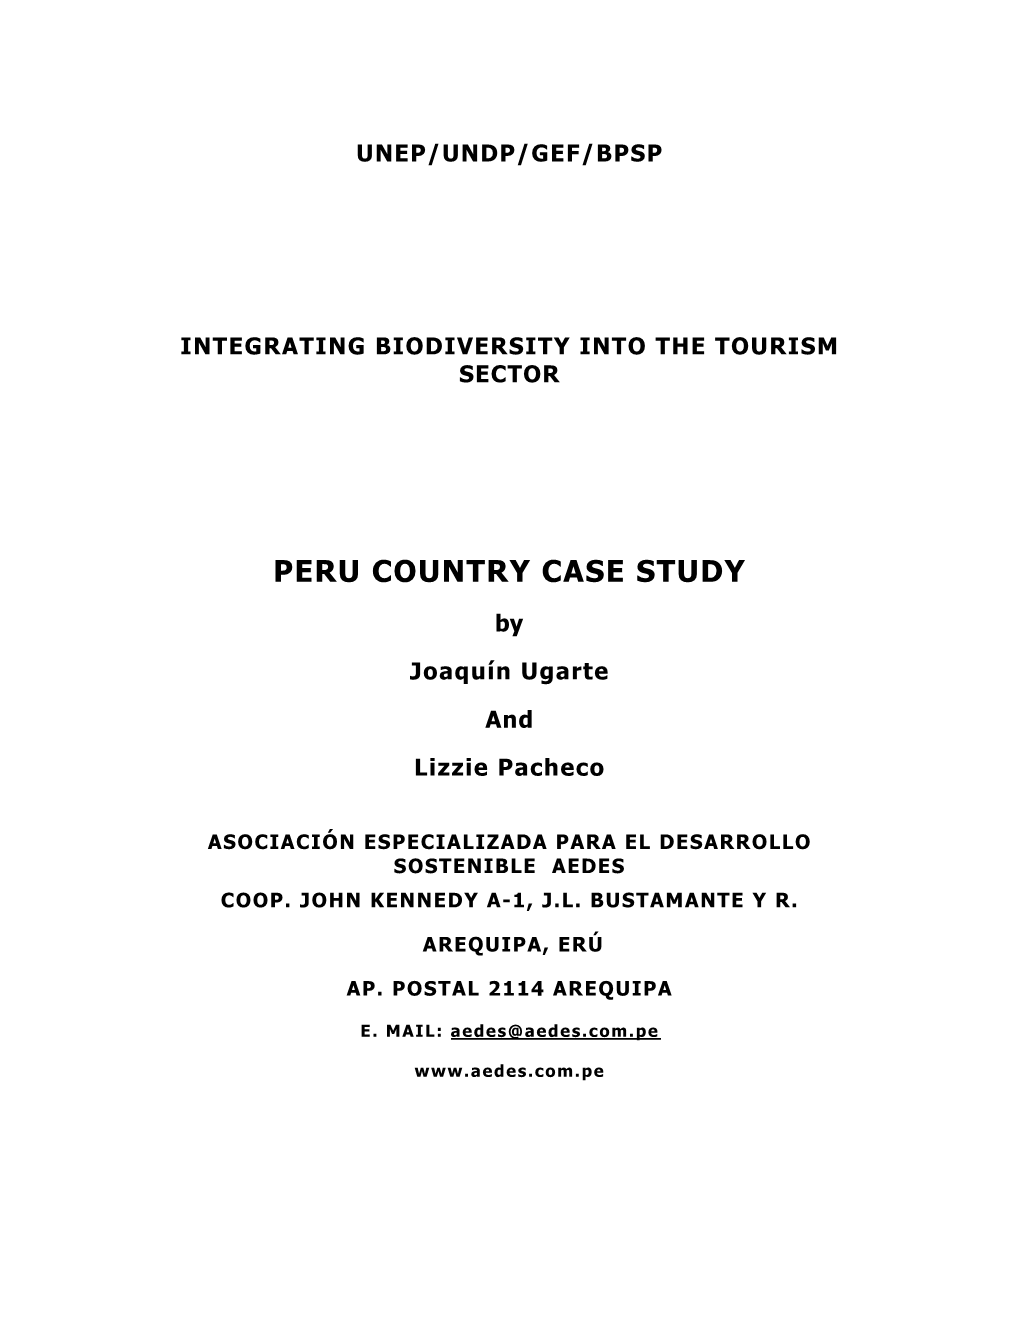 Peru Country Case Study